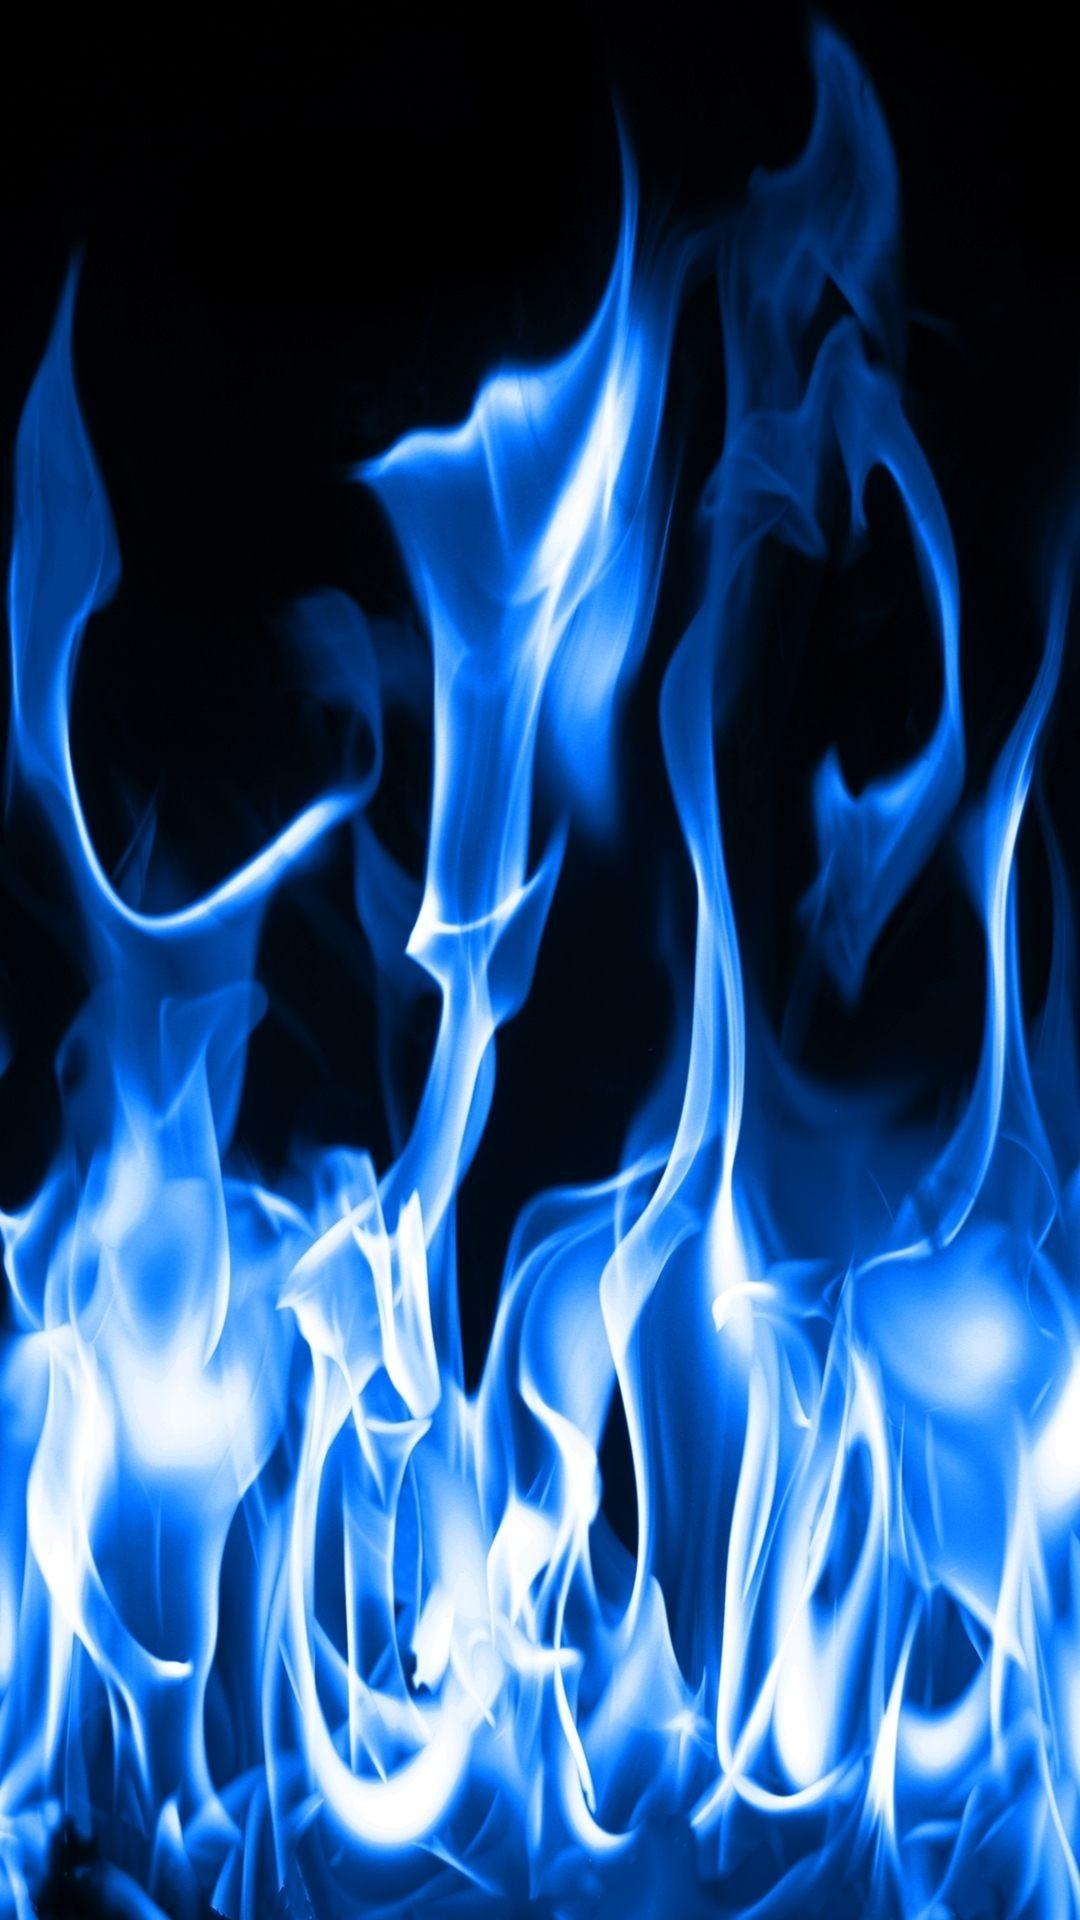 Blue Fire Wallpaper HD